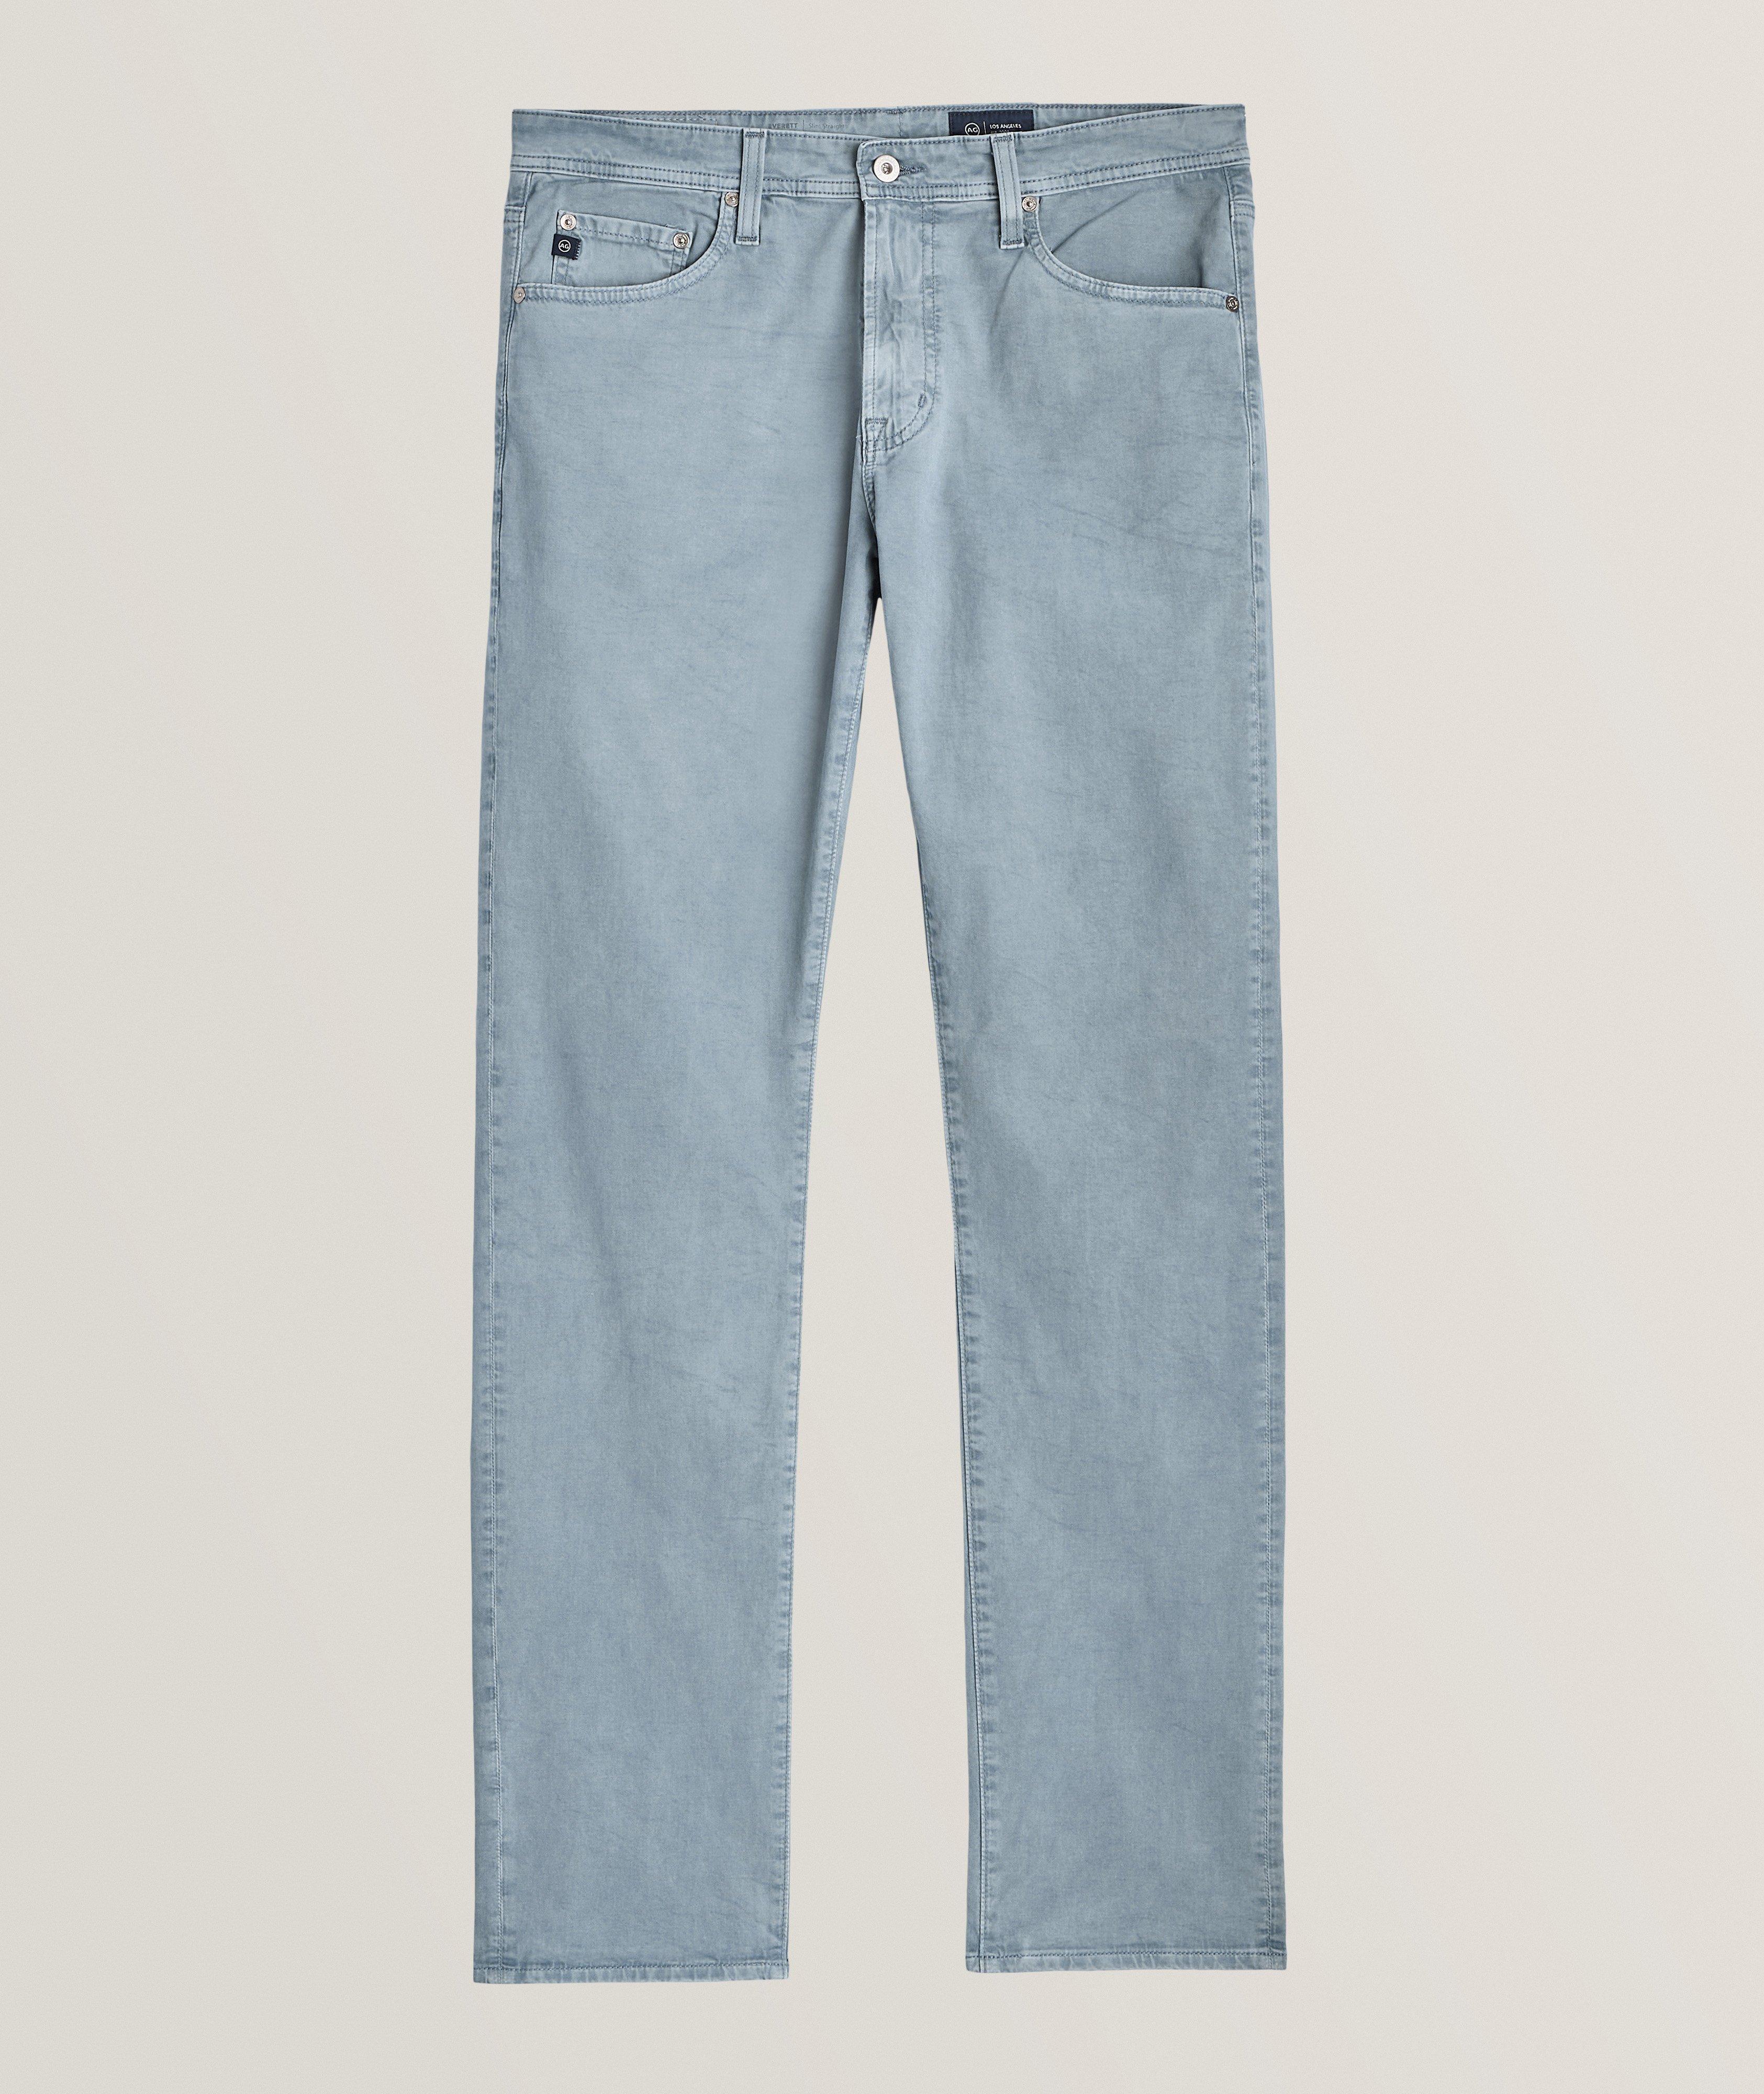 Modern Slim Fit Tellis Stretch-Cotton Pants image 0